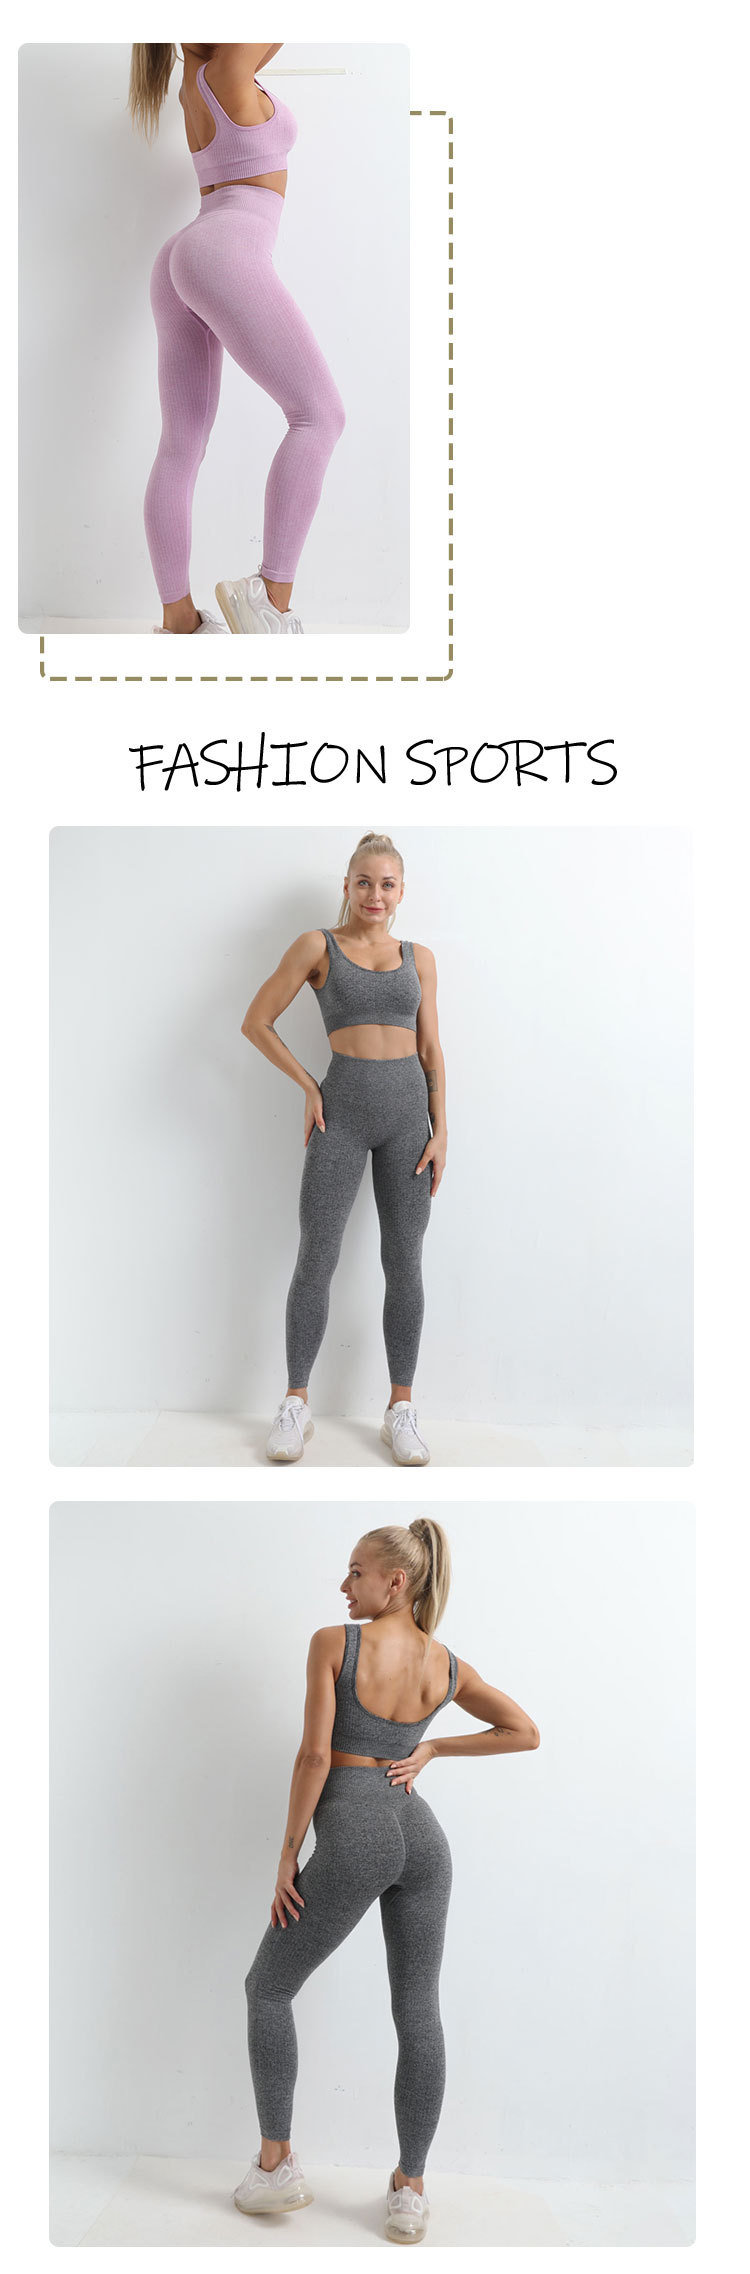 Fitness Clothing Nylon Seamless Sport Bra and Leggings Female Yoga Set 2PCS Suit Sportswear for Women